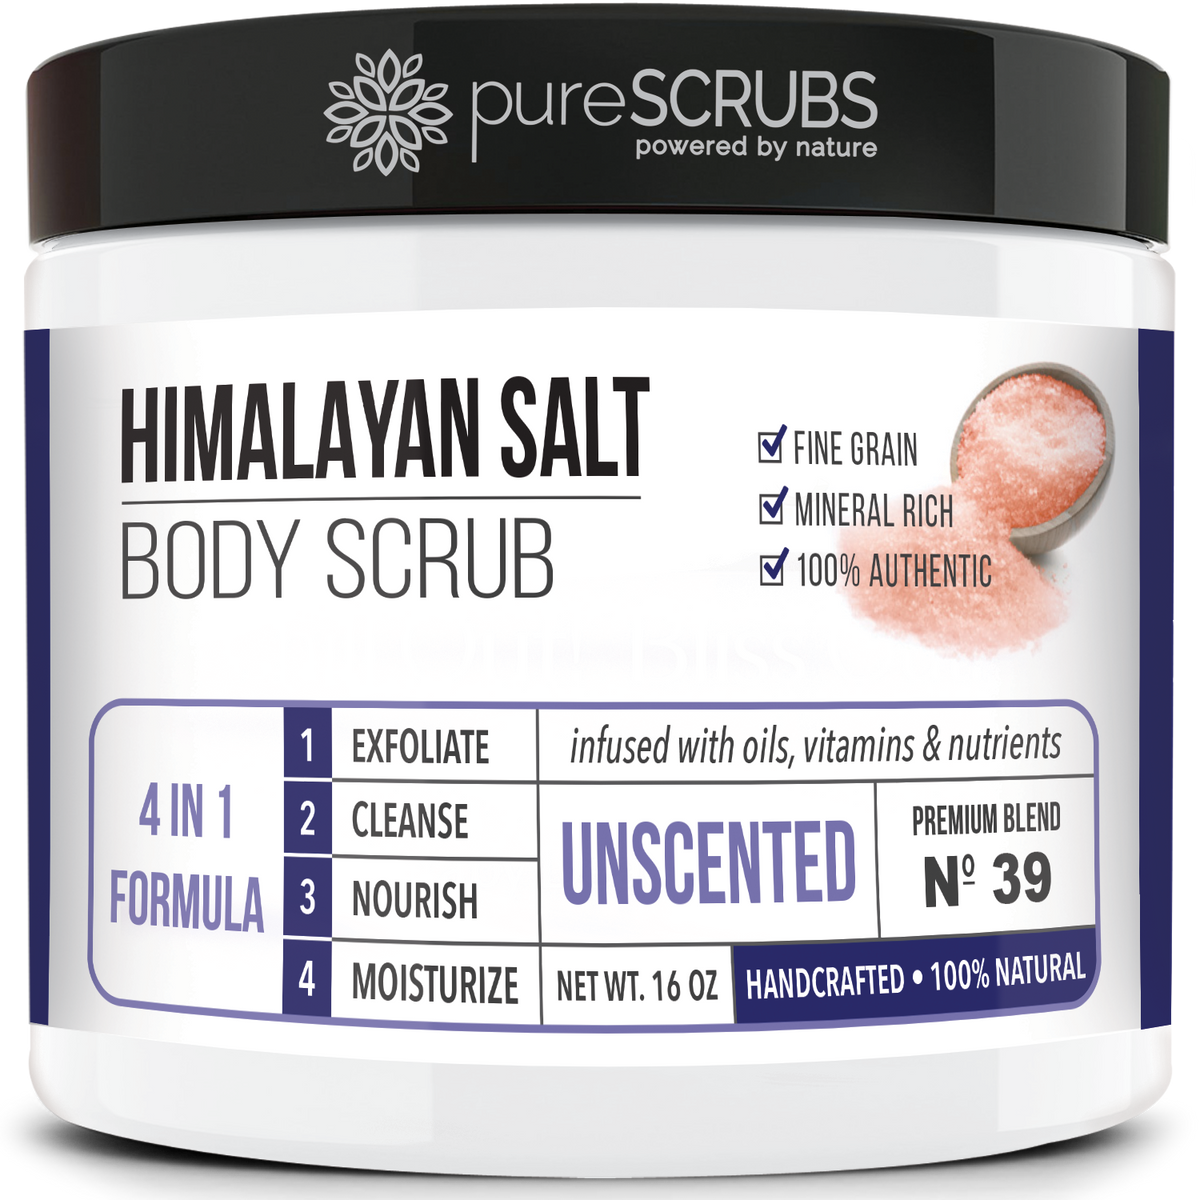 Unscented Body Scrub / Pink Himalayan Salt / Premium Blend #39